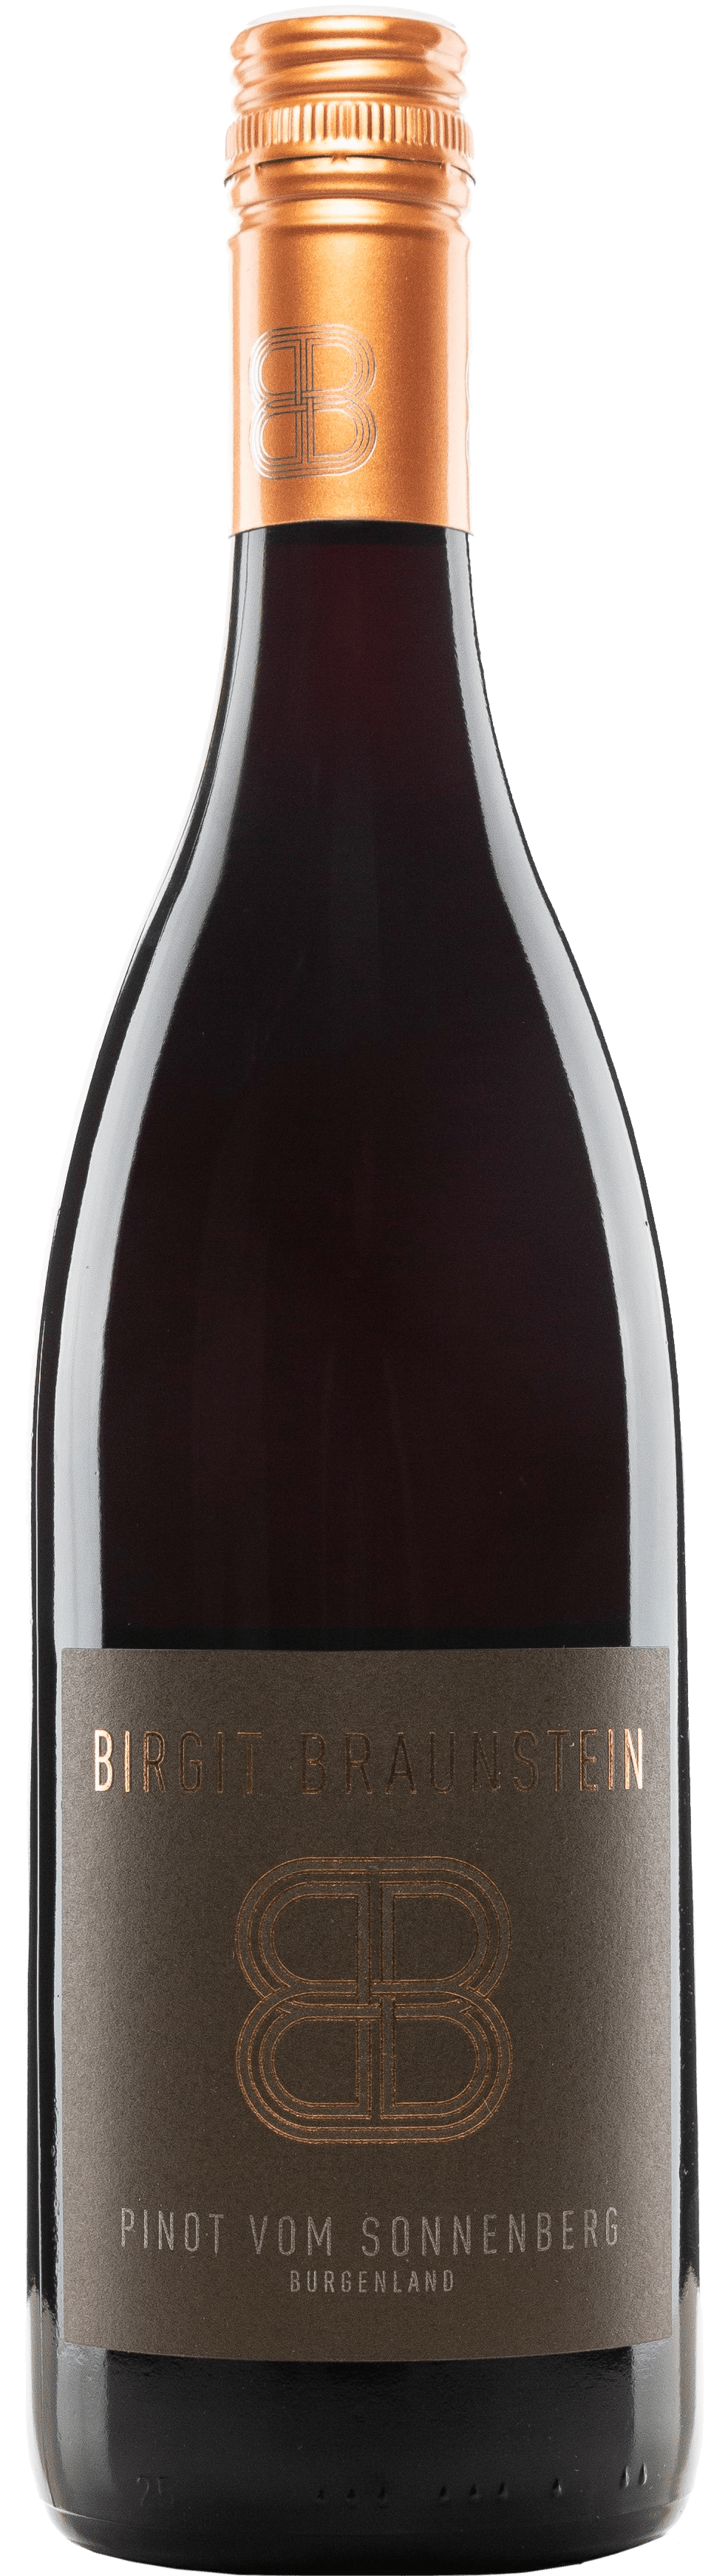 Pinot vom Sonnenberg